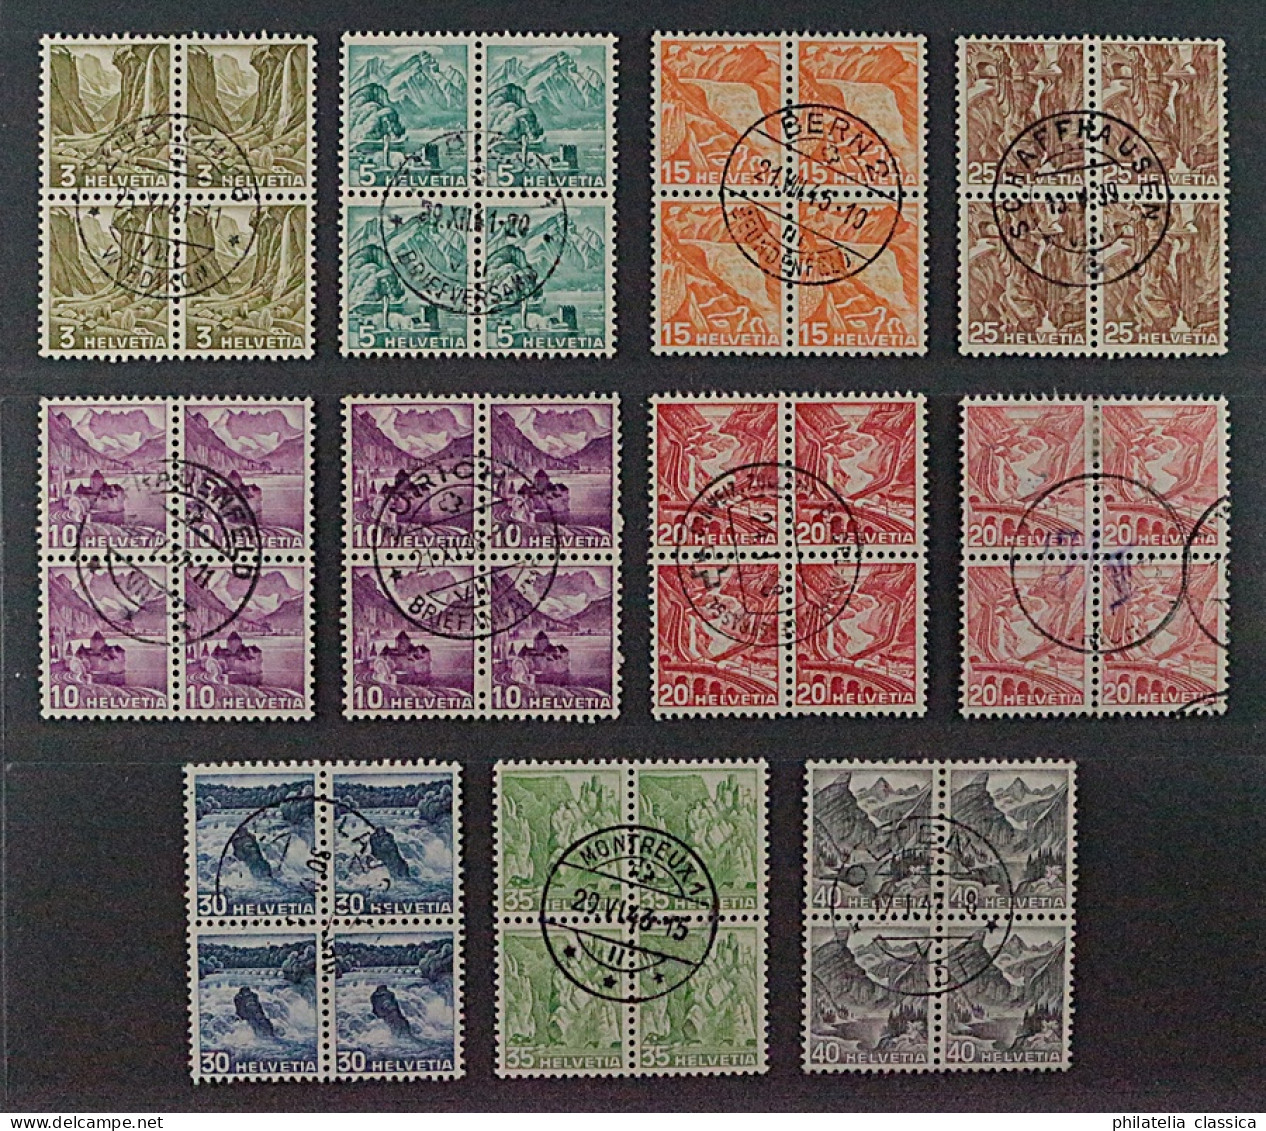 SCHWEIZ SBK 200-09y, 203Ay, 205Ay, Kpl. Viererblocks Zentrum-Stempel, 2850,-SFr. - Used Stamps